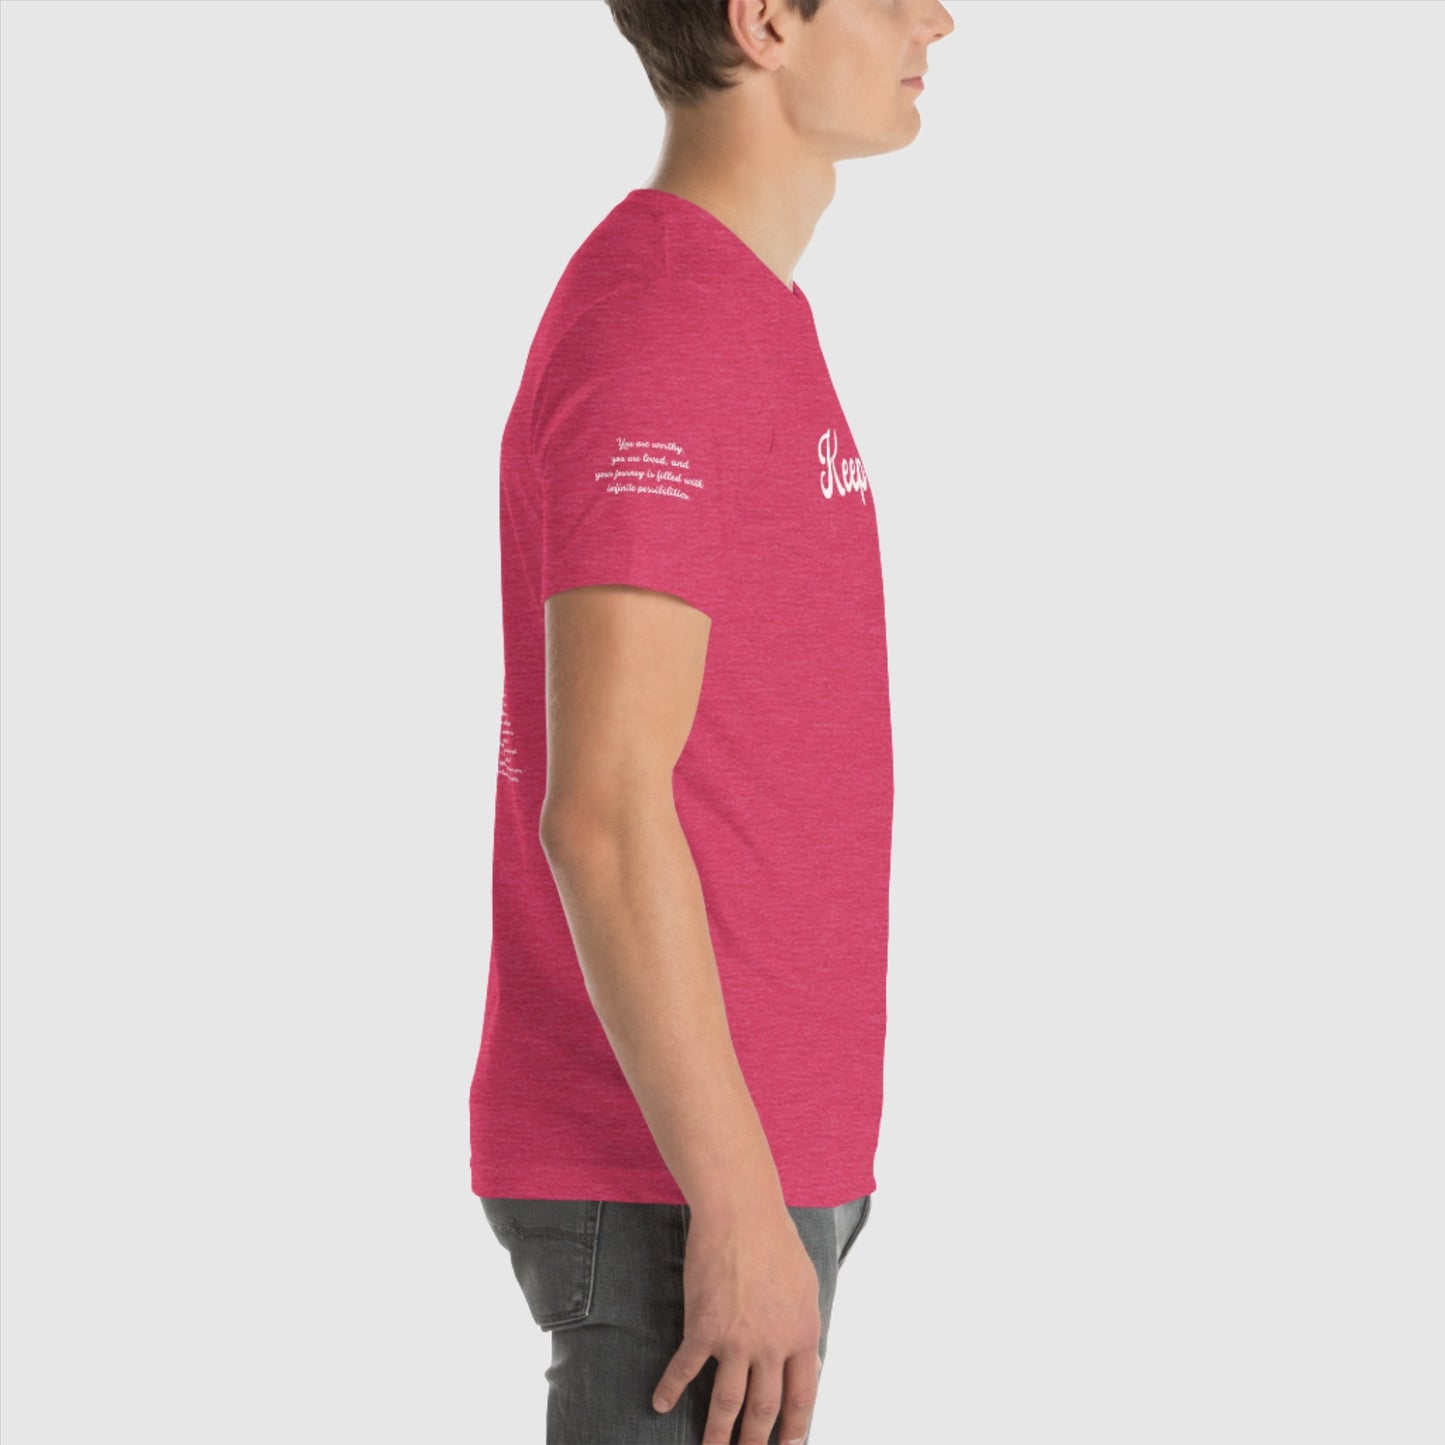 Unisex 100 Reasons to Keep Going Sweatshirt T-Shirt